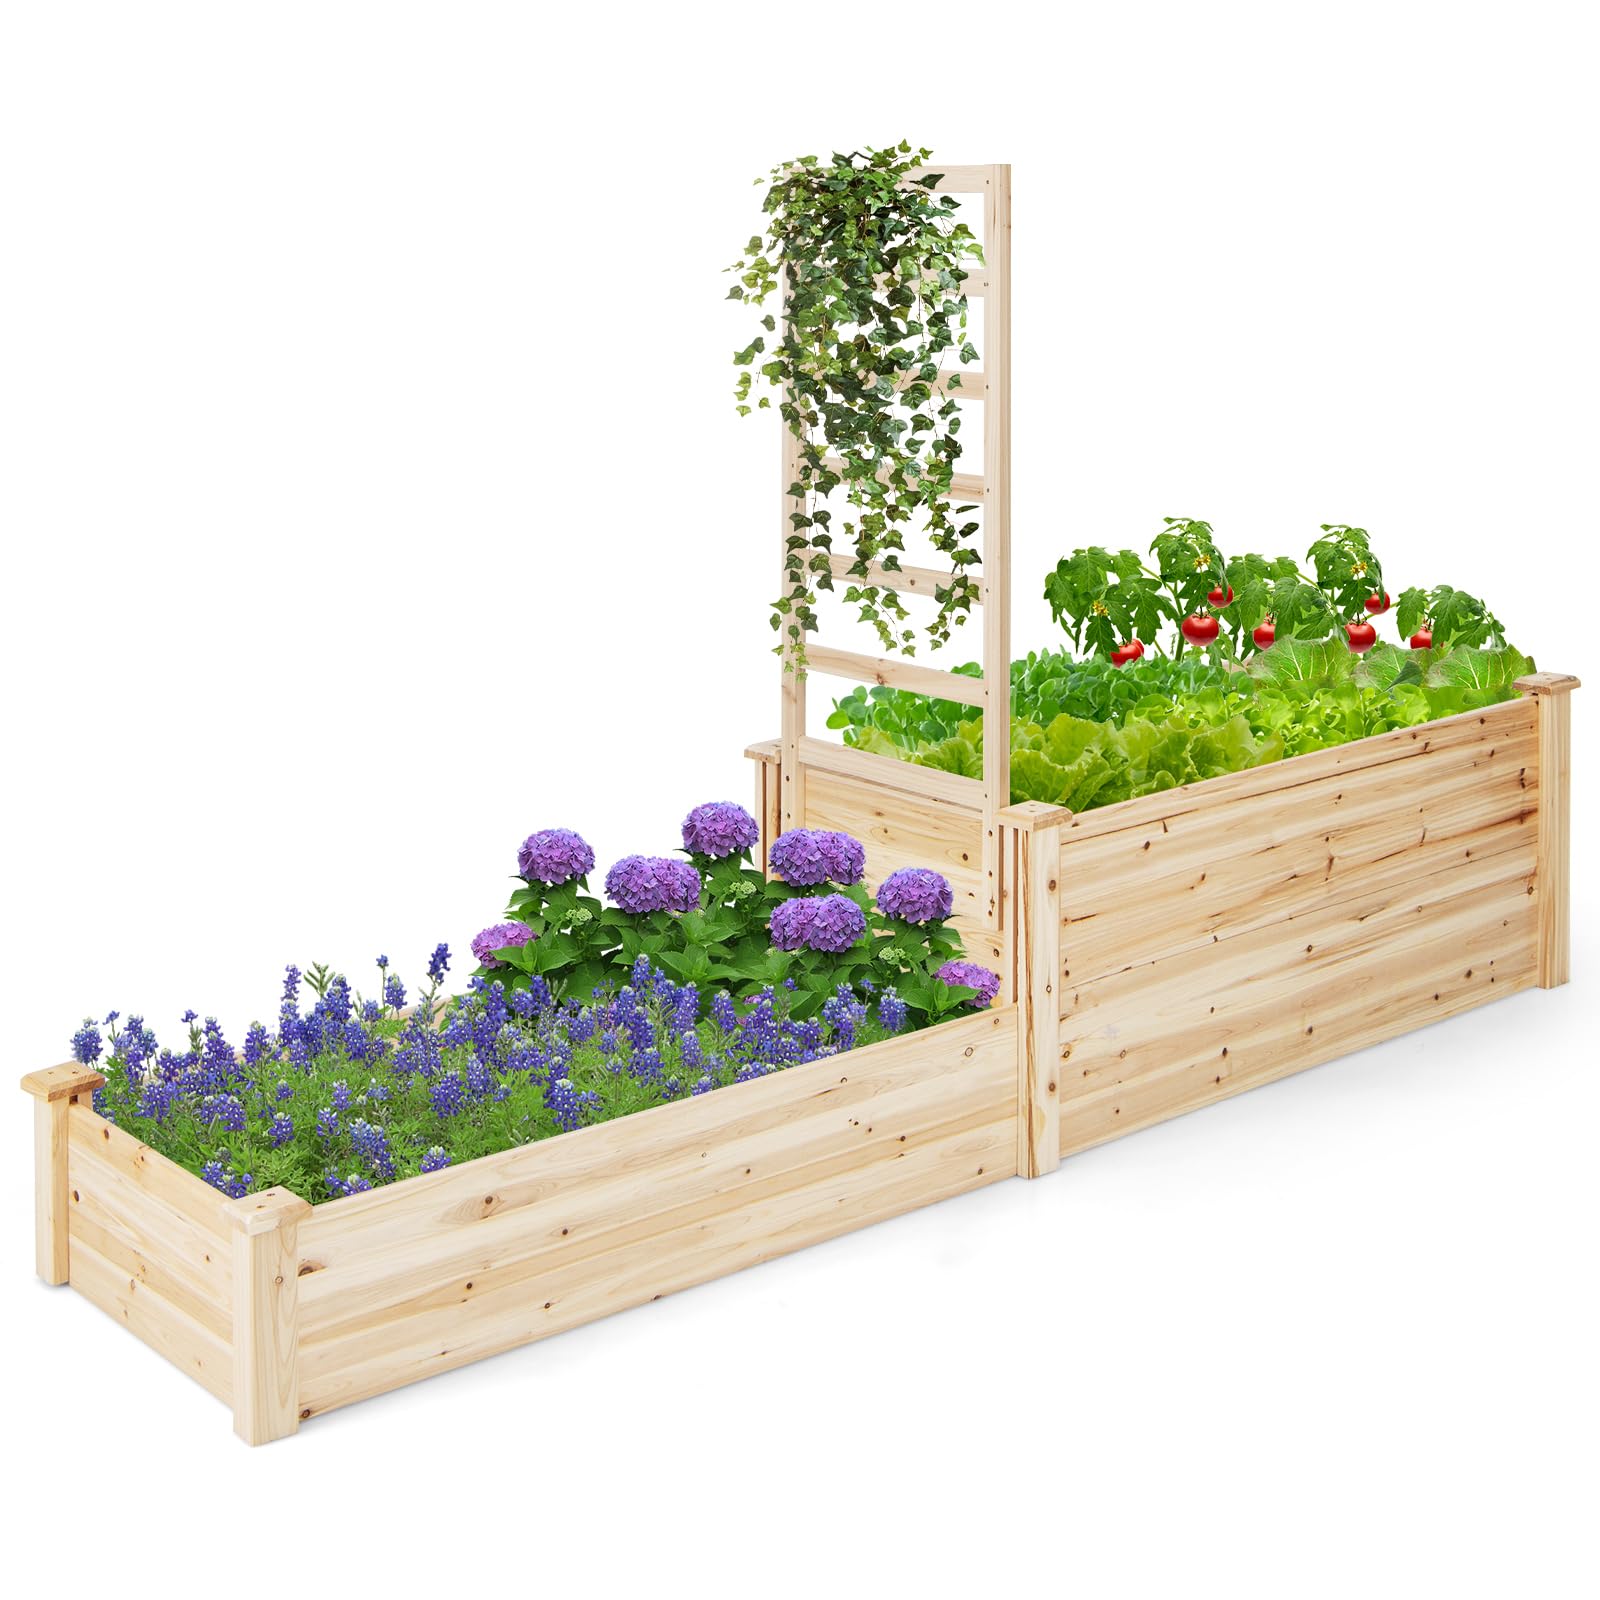 Giantex Raised Garden Bed with Trellis, Set of 2 Wood Shallow & Deep Planter Box for Climbing Plants